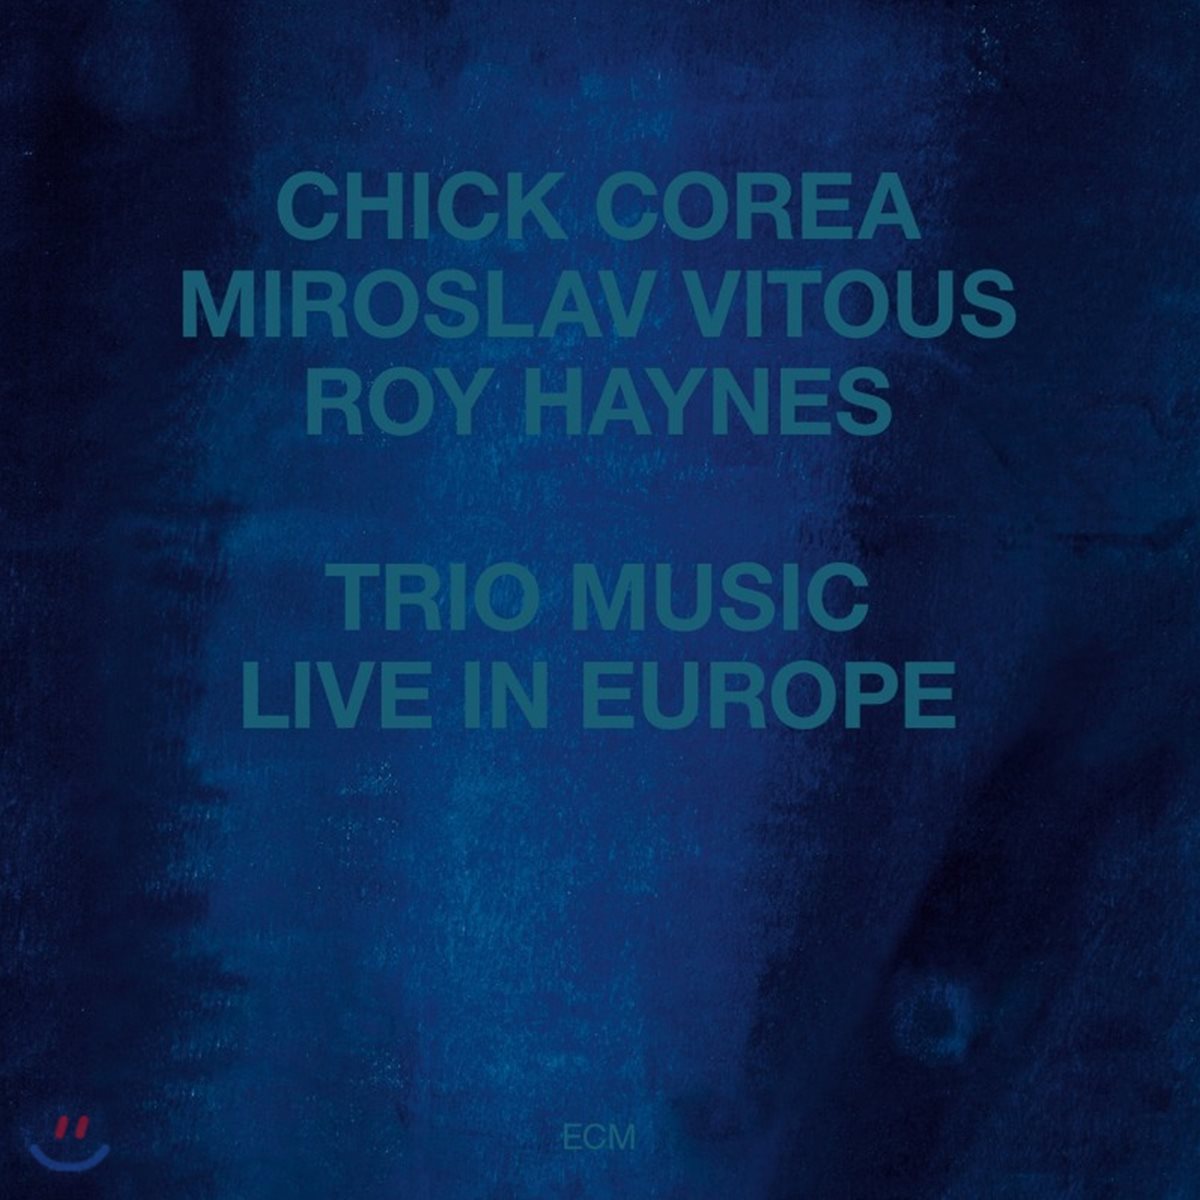 Chick Corea (칙 코리아) - Trio Music: Live In Europe (SHMCD Japan Edition)